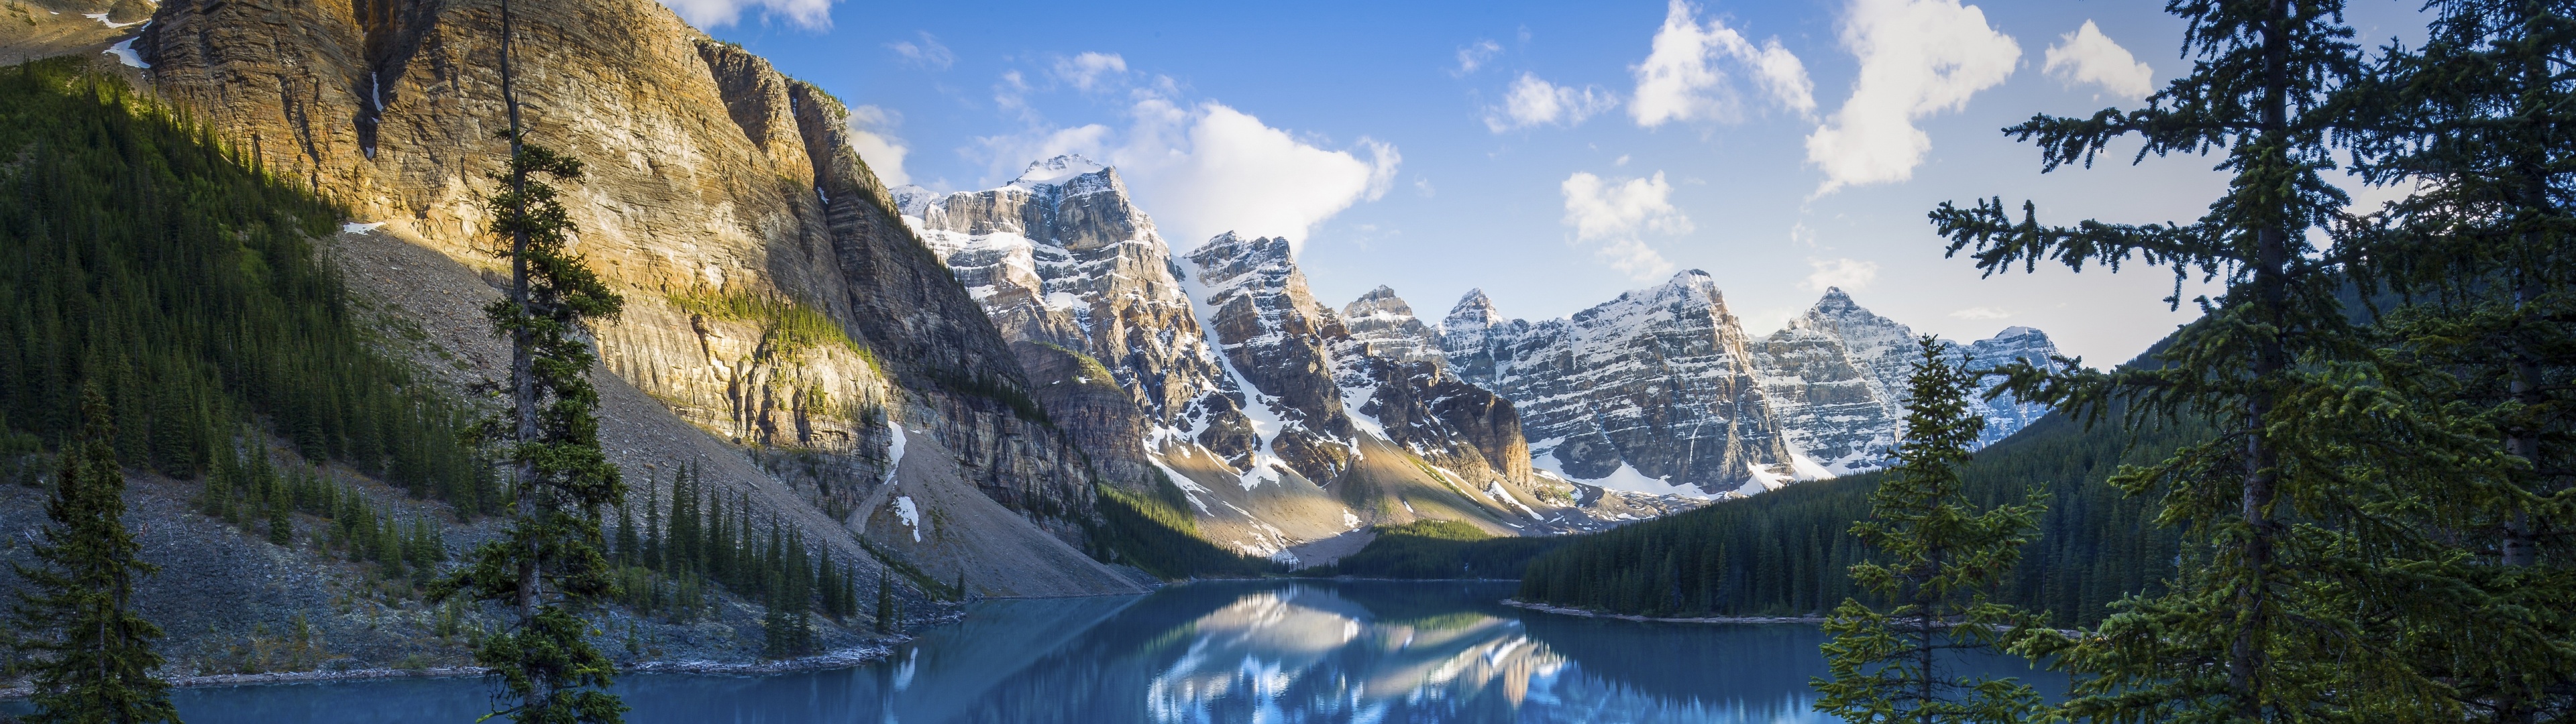 Wallpaper Banff National Park, Alberta, Canada, 4K, Travel #23419